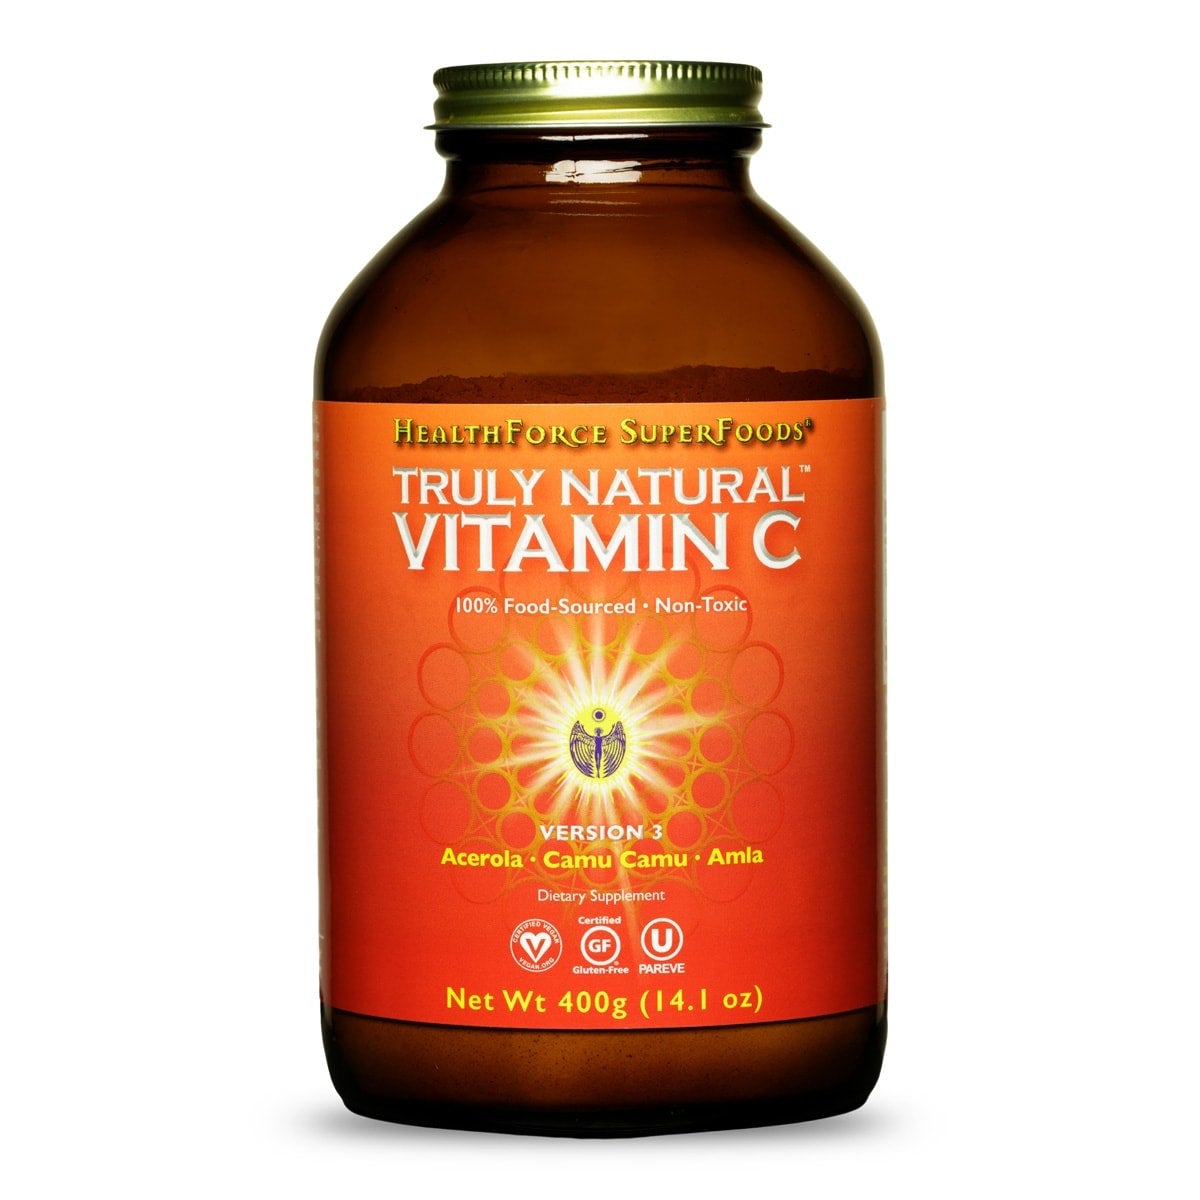 Truly Natural™ Vitamin C Nahrungsergänzungsmittel HealthForce SuperFoods 400g - Genuine Selection